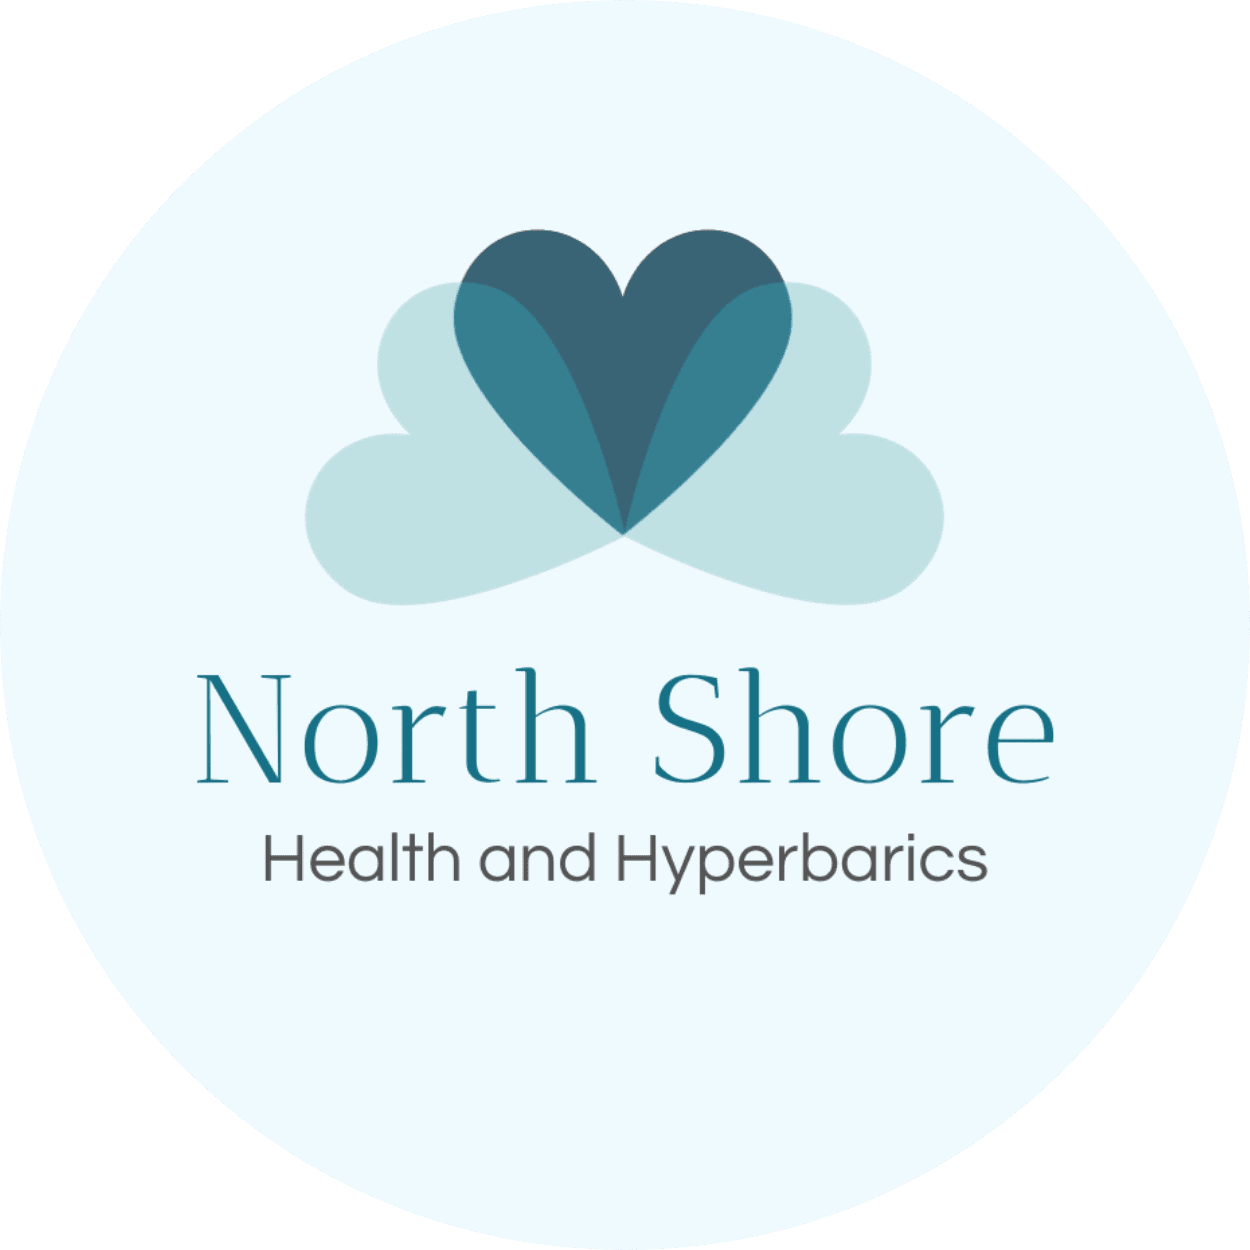 North Shore Health and Hyperbarics